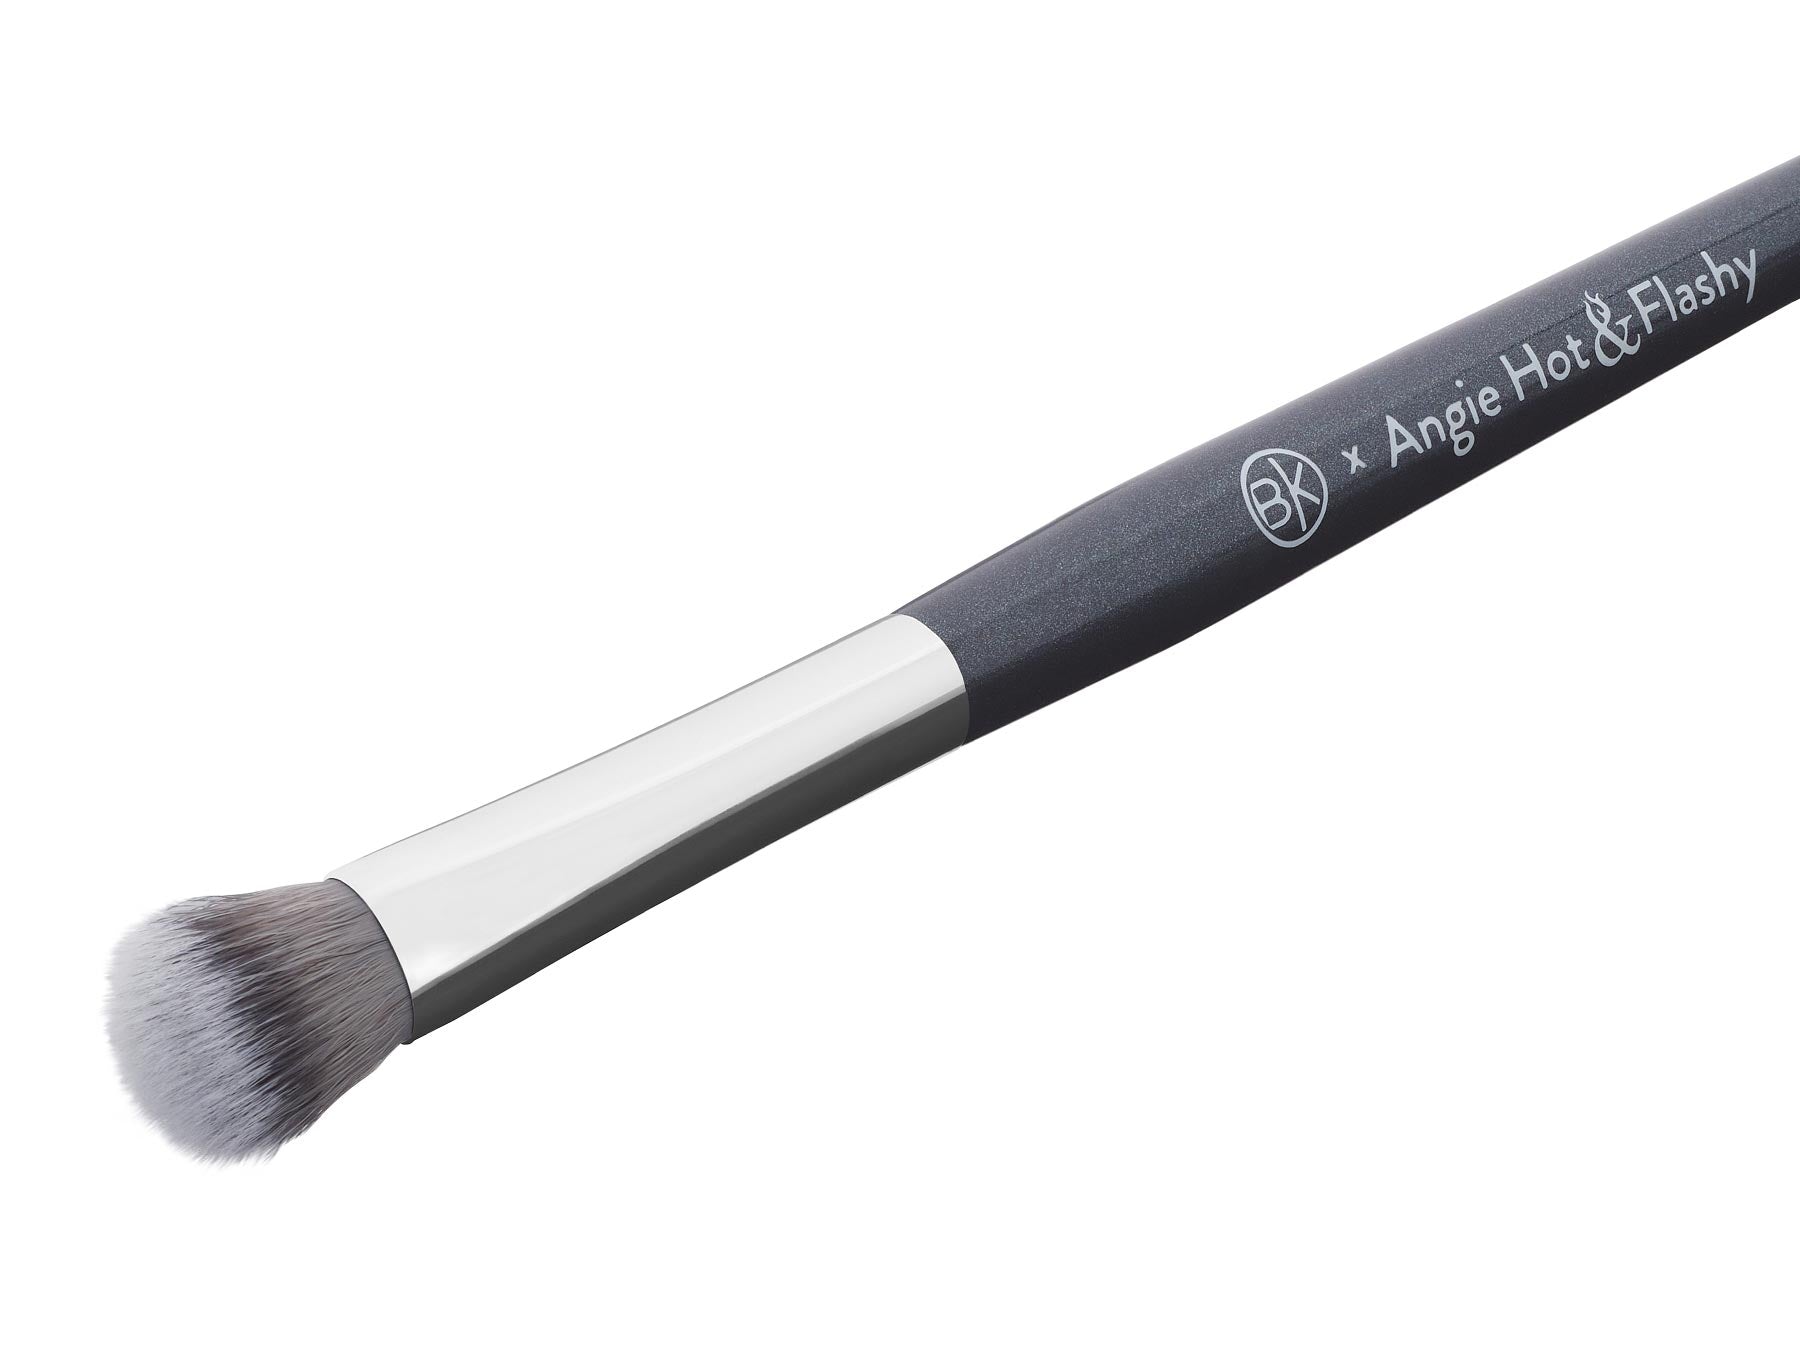 BK Beauty x Angie Hot & Flashy - A501 Lid Shader Brush